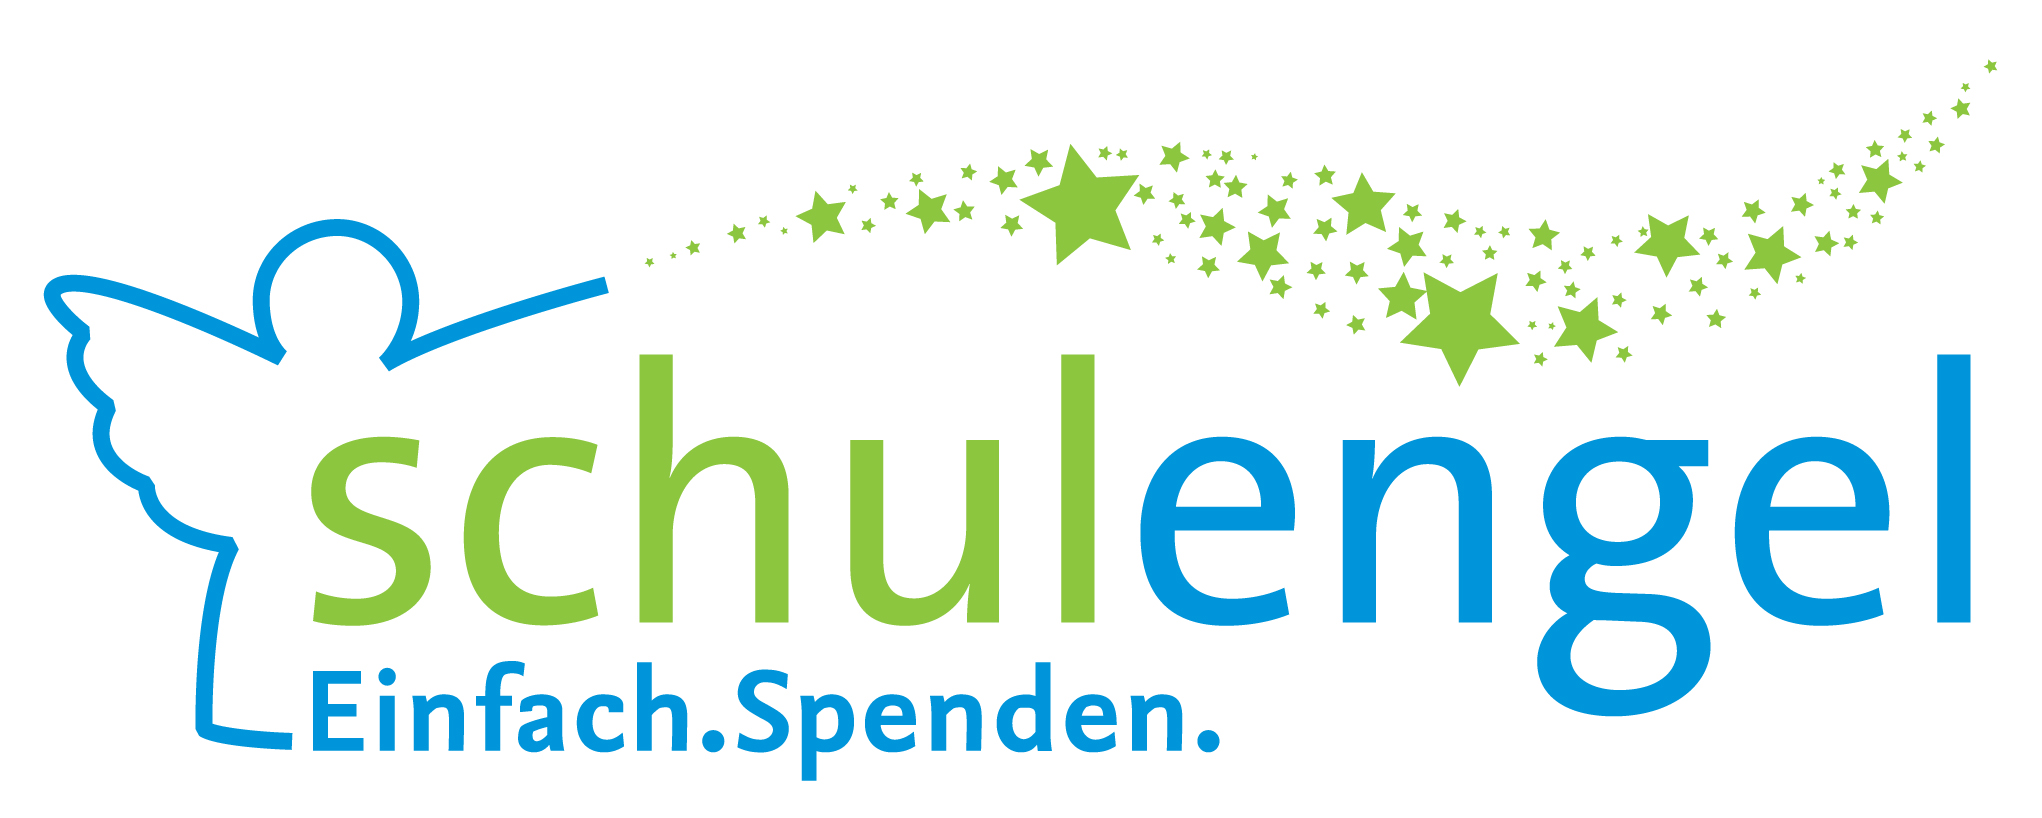 Schulengel-Logo-JPG